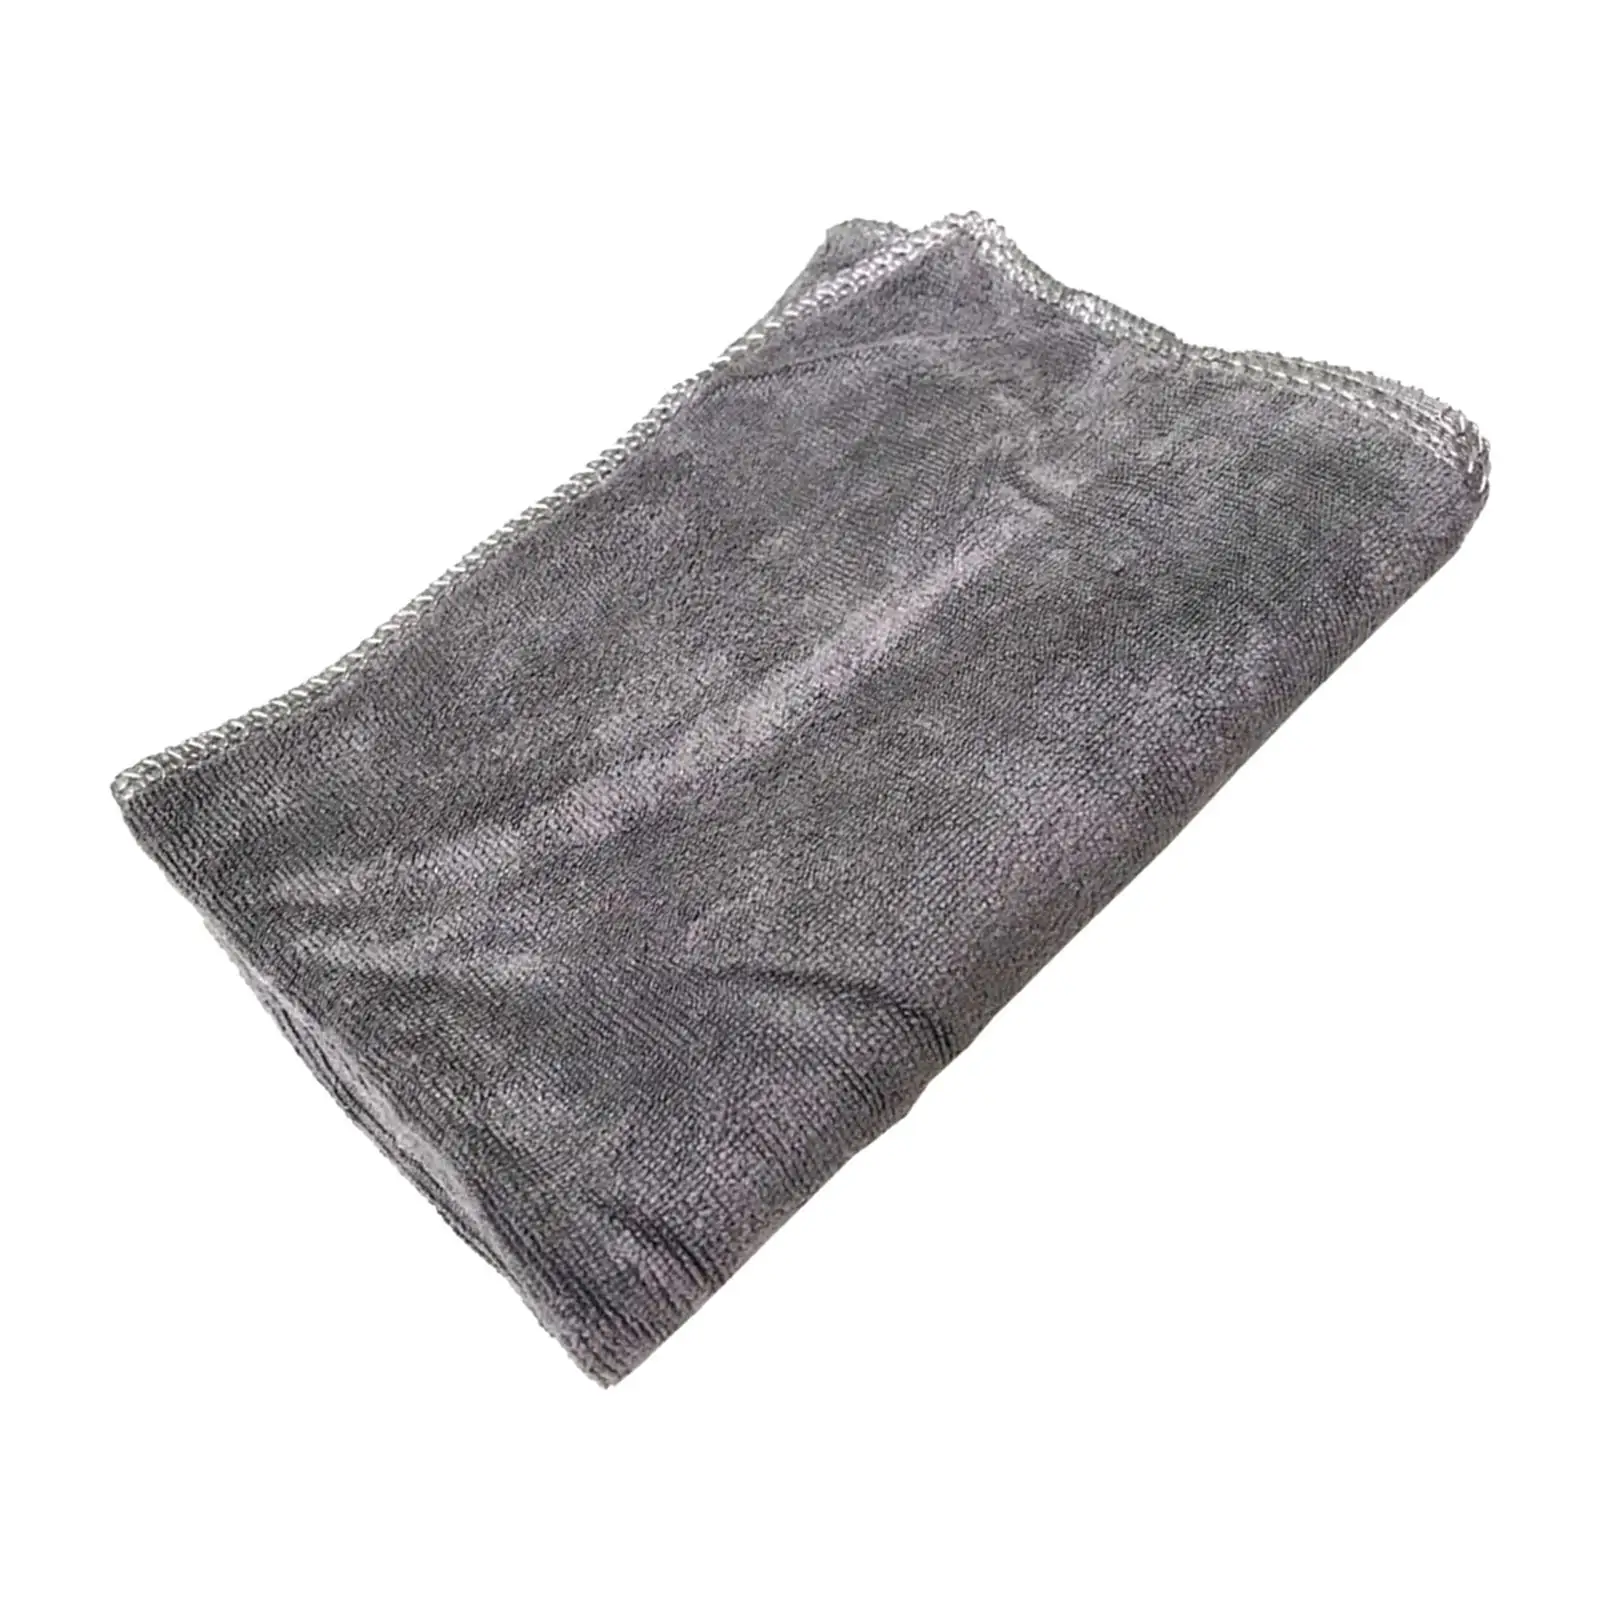 Soft Car Wash Microfiber Towel  Towel Absorbent Plush Cleaning